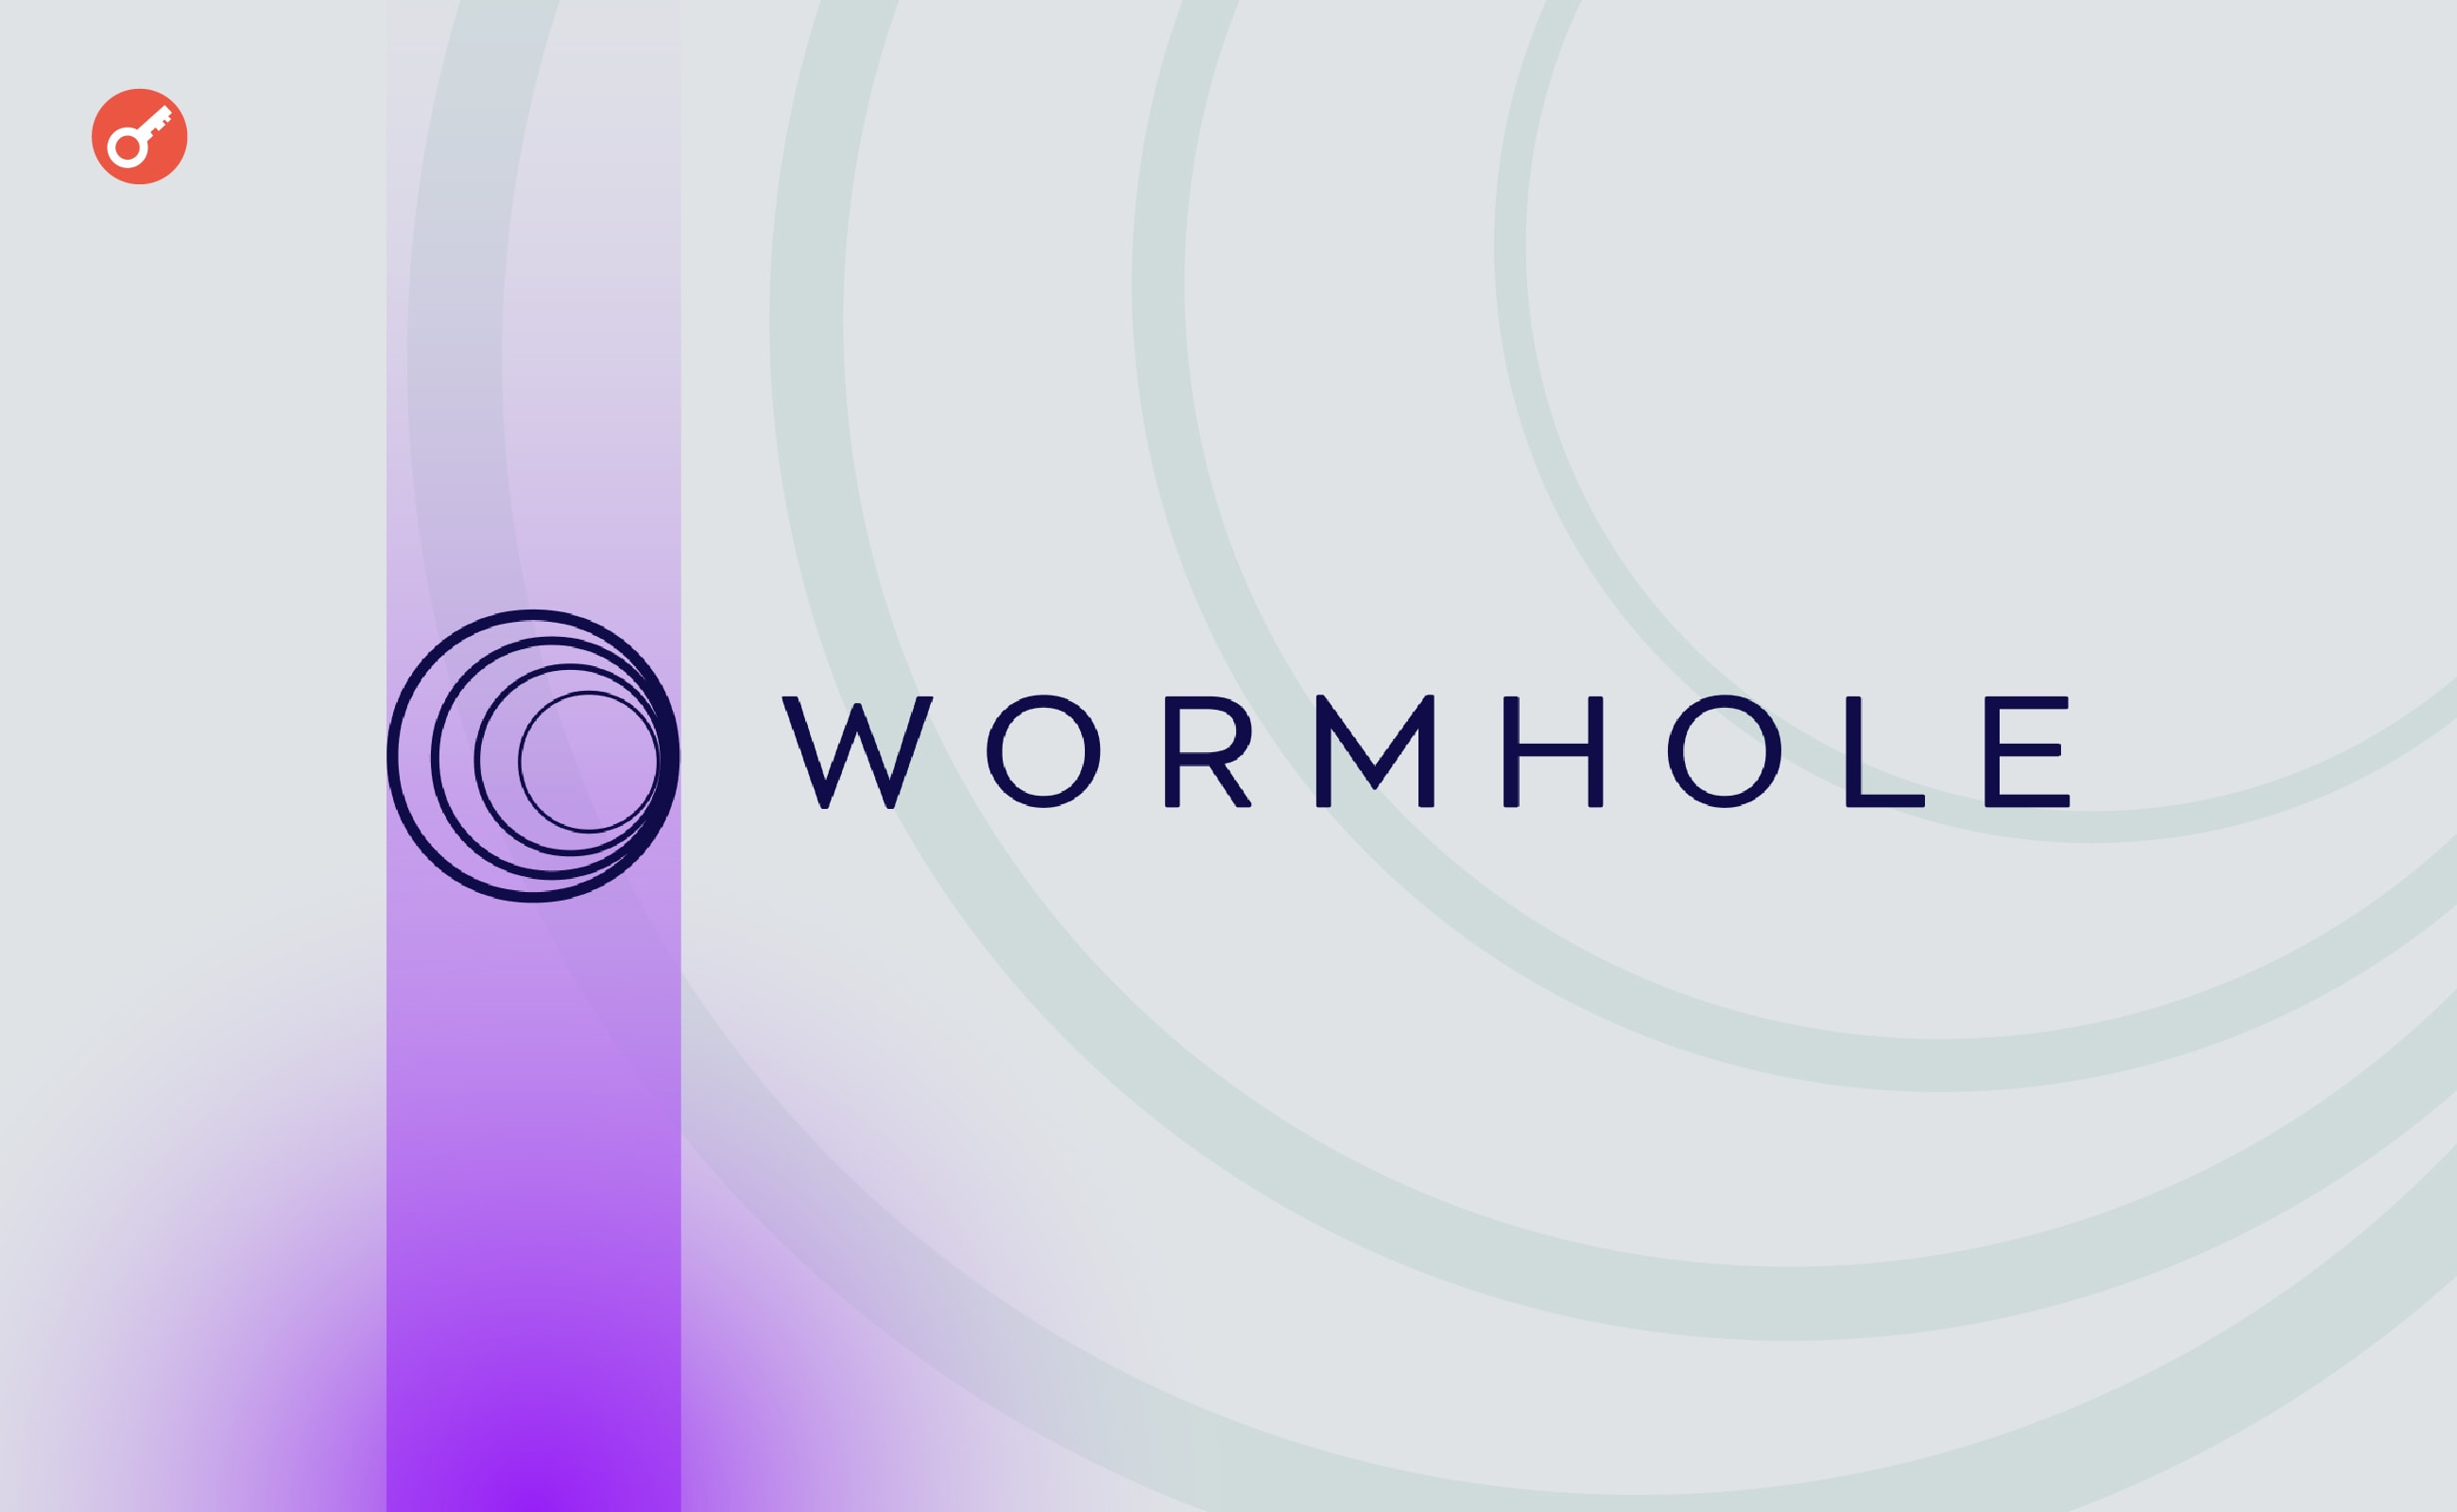 Рыночная оценка аирдропа токена Wormhole достигла почти $3 млрд. Заглавный коллаж новости.